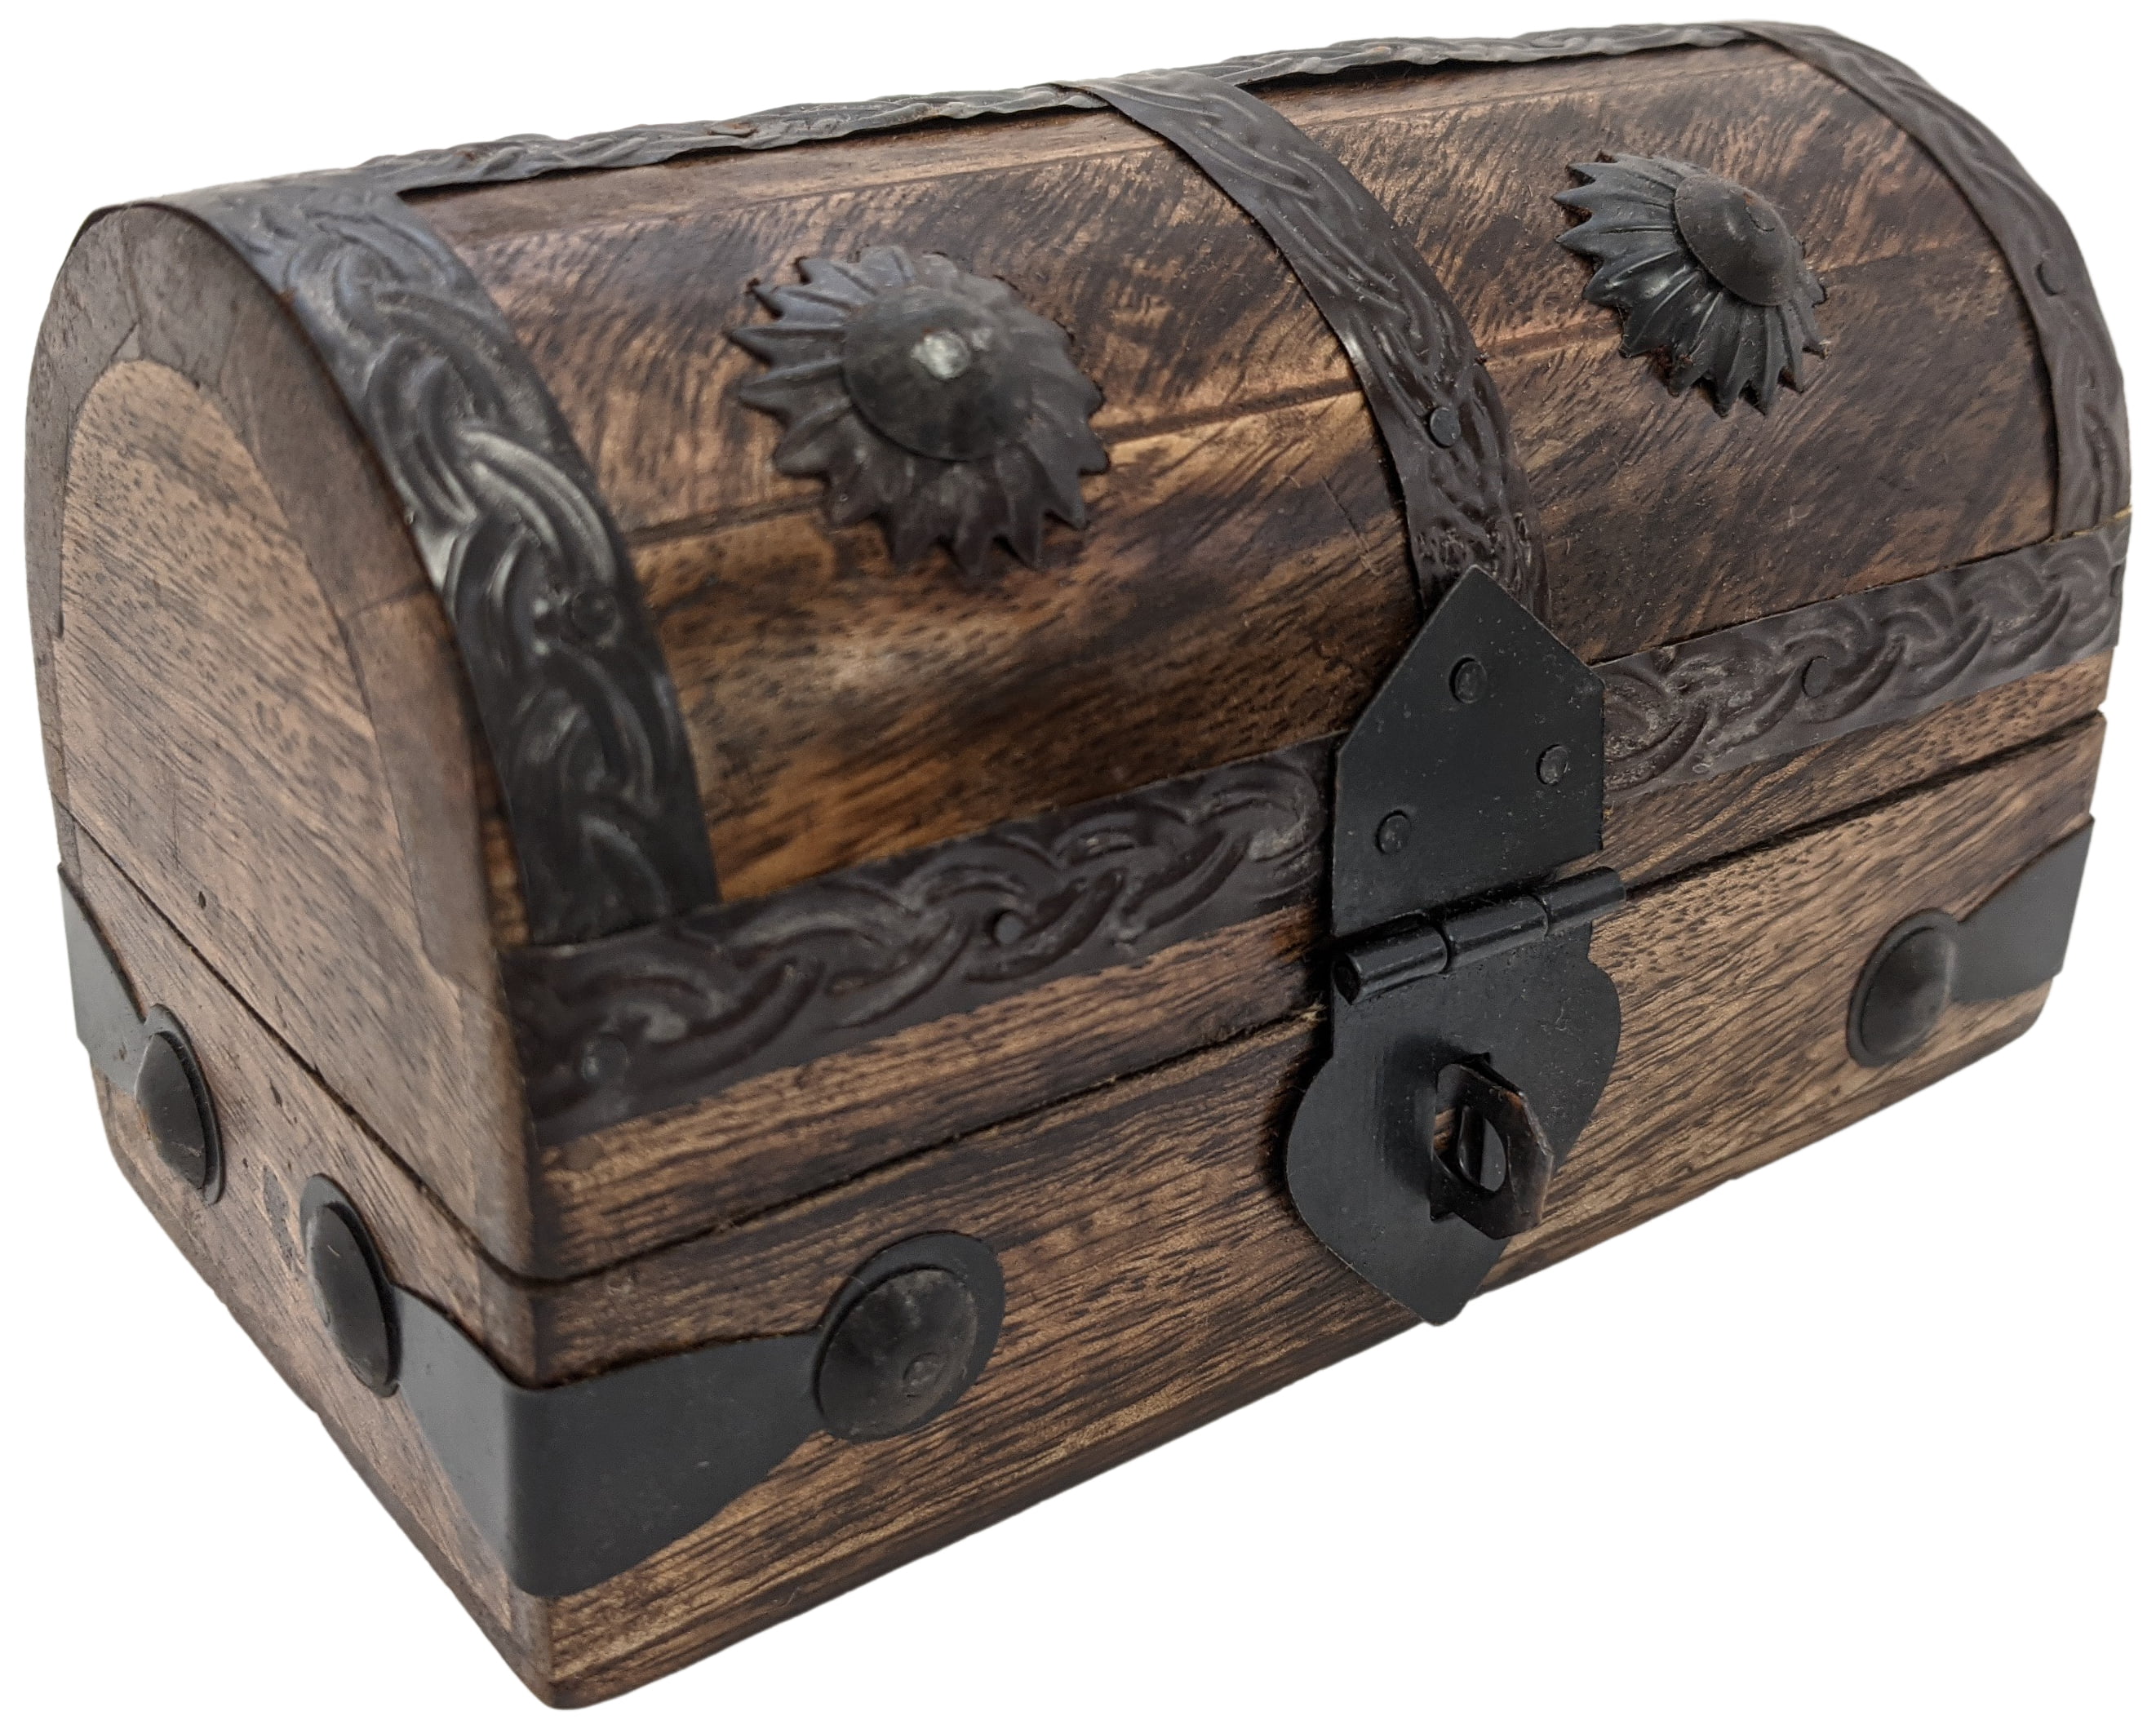 Decorative Vintage Trinket Boxes Small Wooden Storage Jewelry Box Treasure Chest